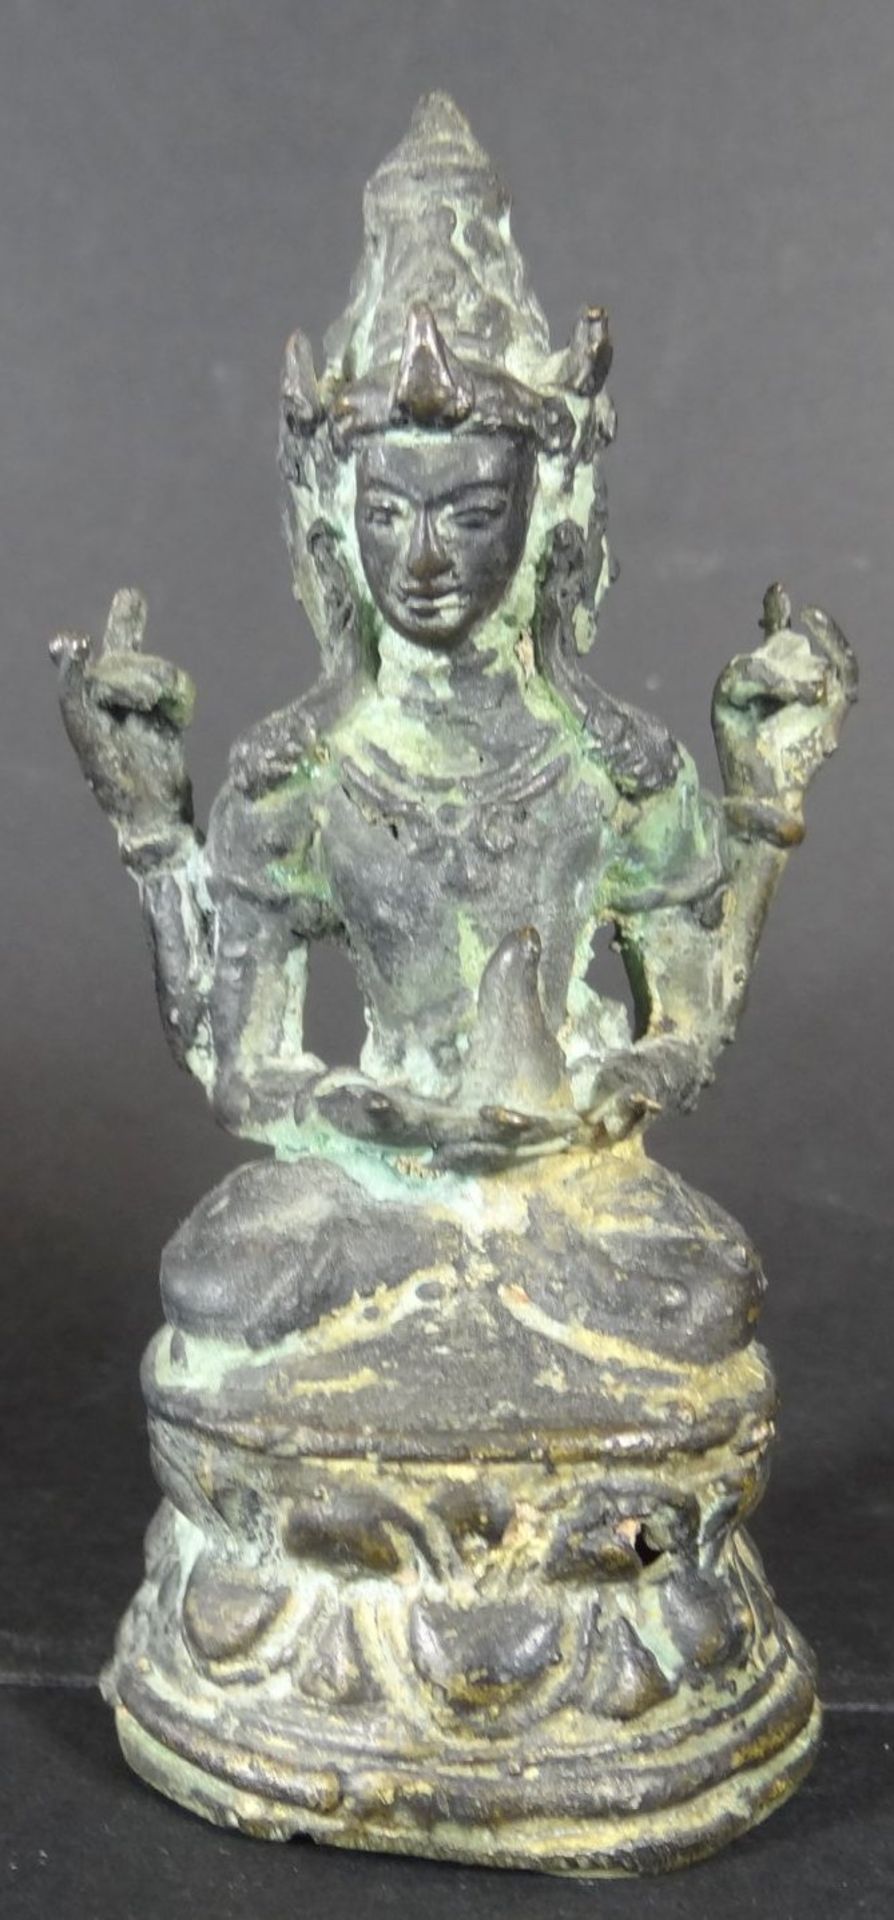 Shalinindia Hindu Götter Statue Brahma Vishnu Mahesh, Trinity, Bronze patiniert, älter, -10